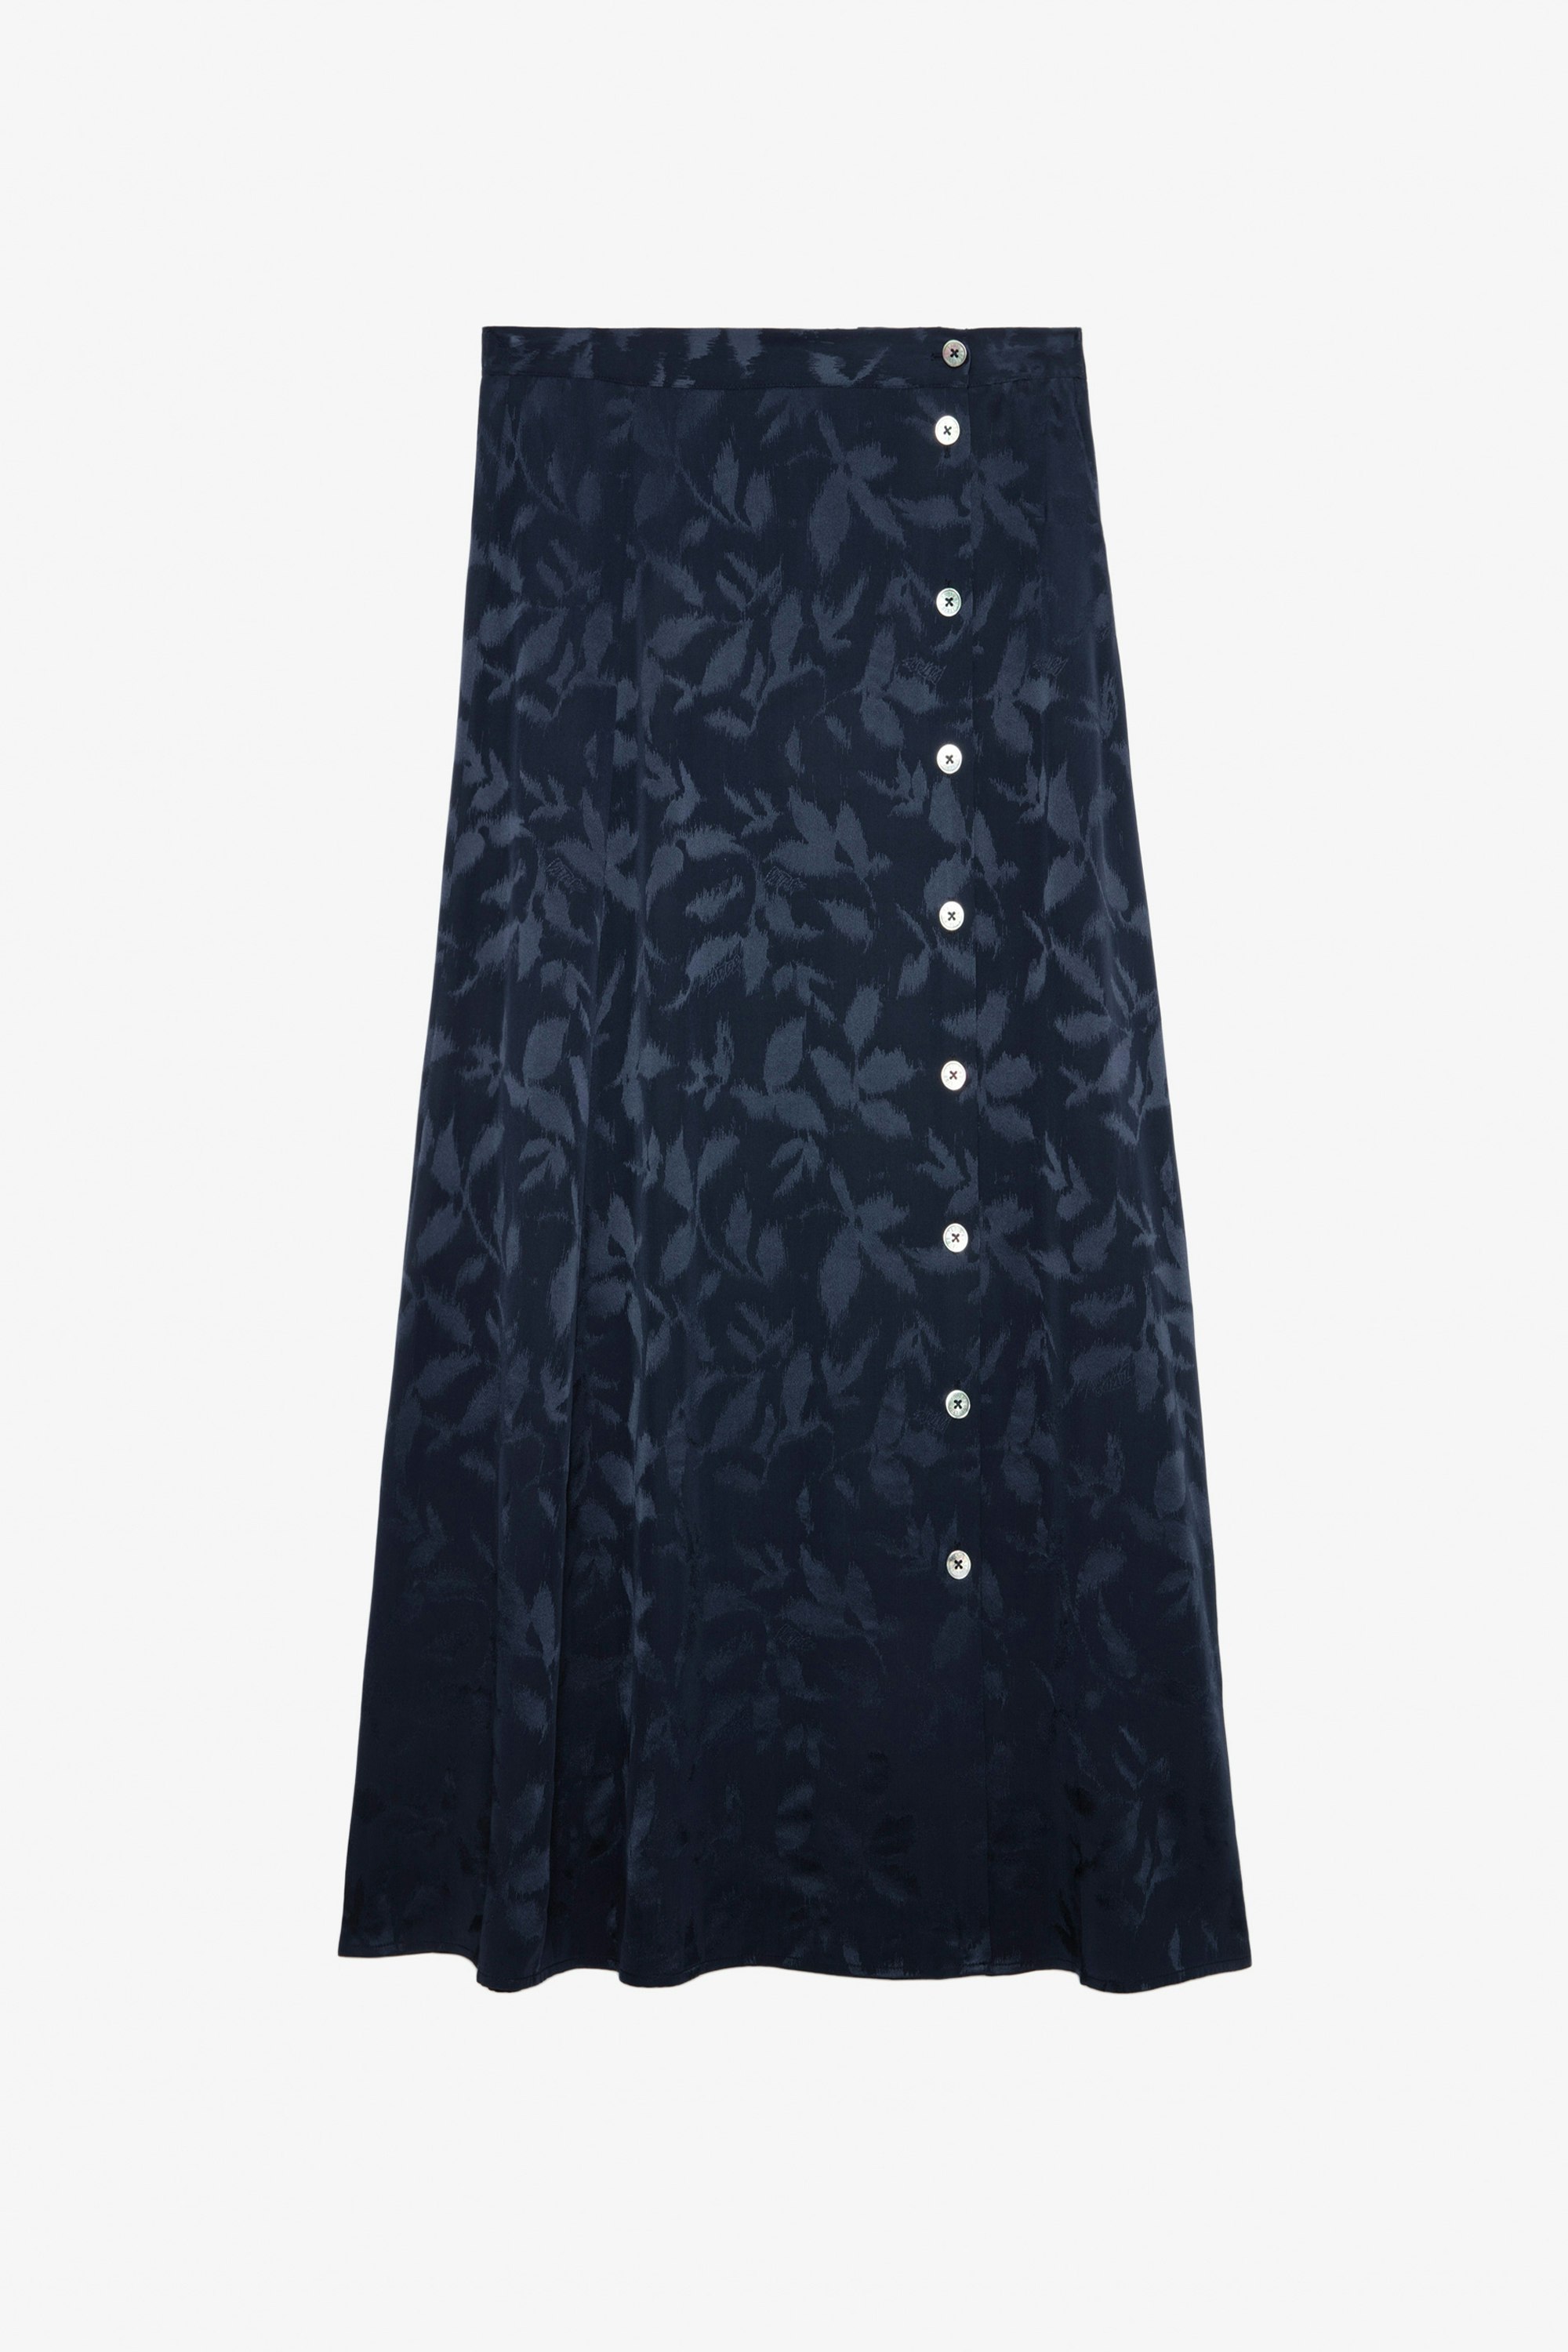 Falda June Seda Jacquard - Falda larga azul marino abotonada de jacquard de seda con motivo estrella para mujer.